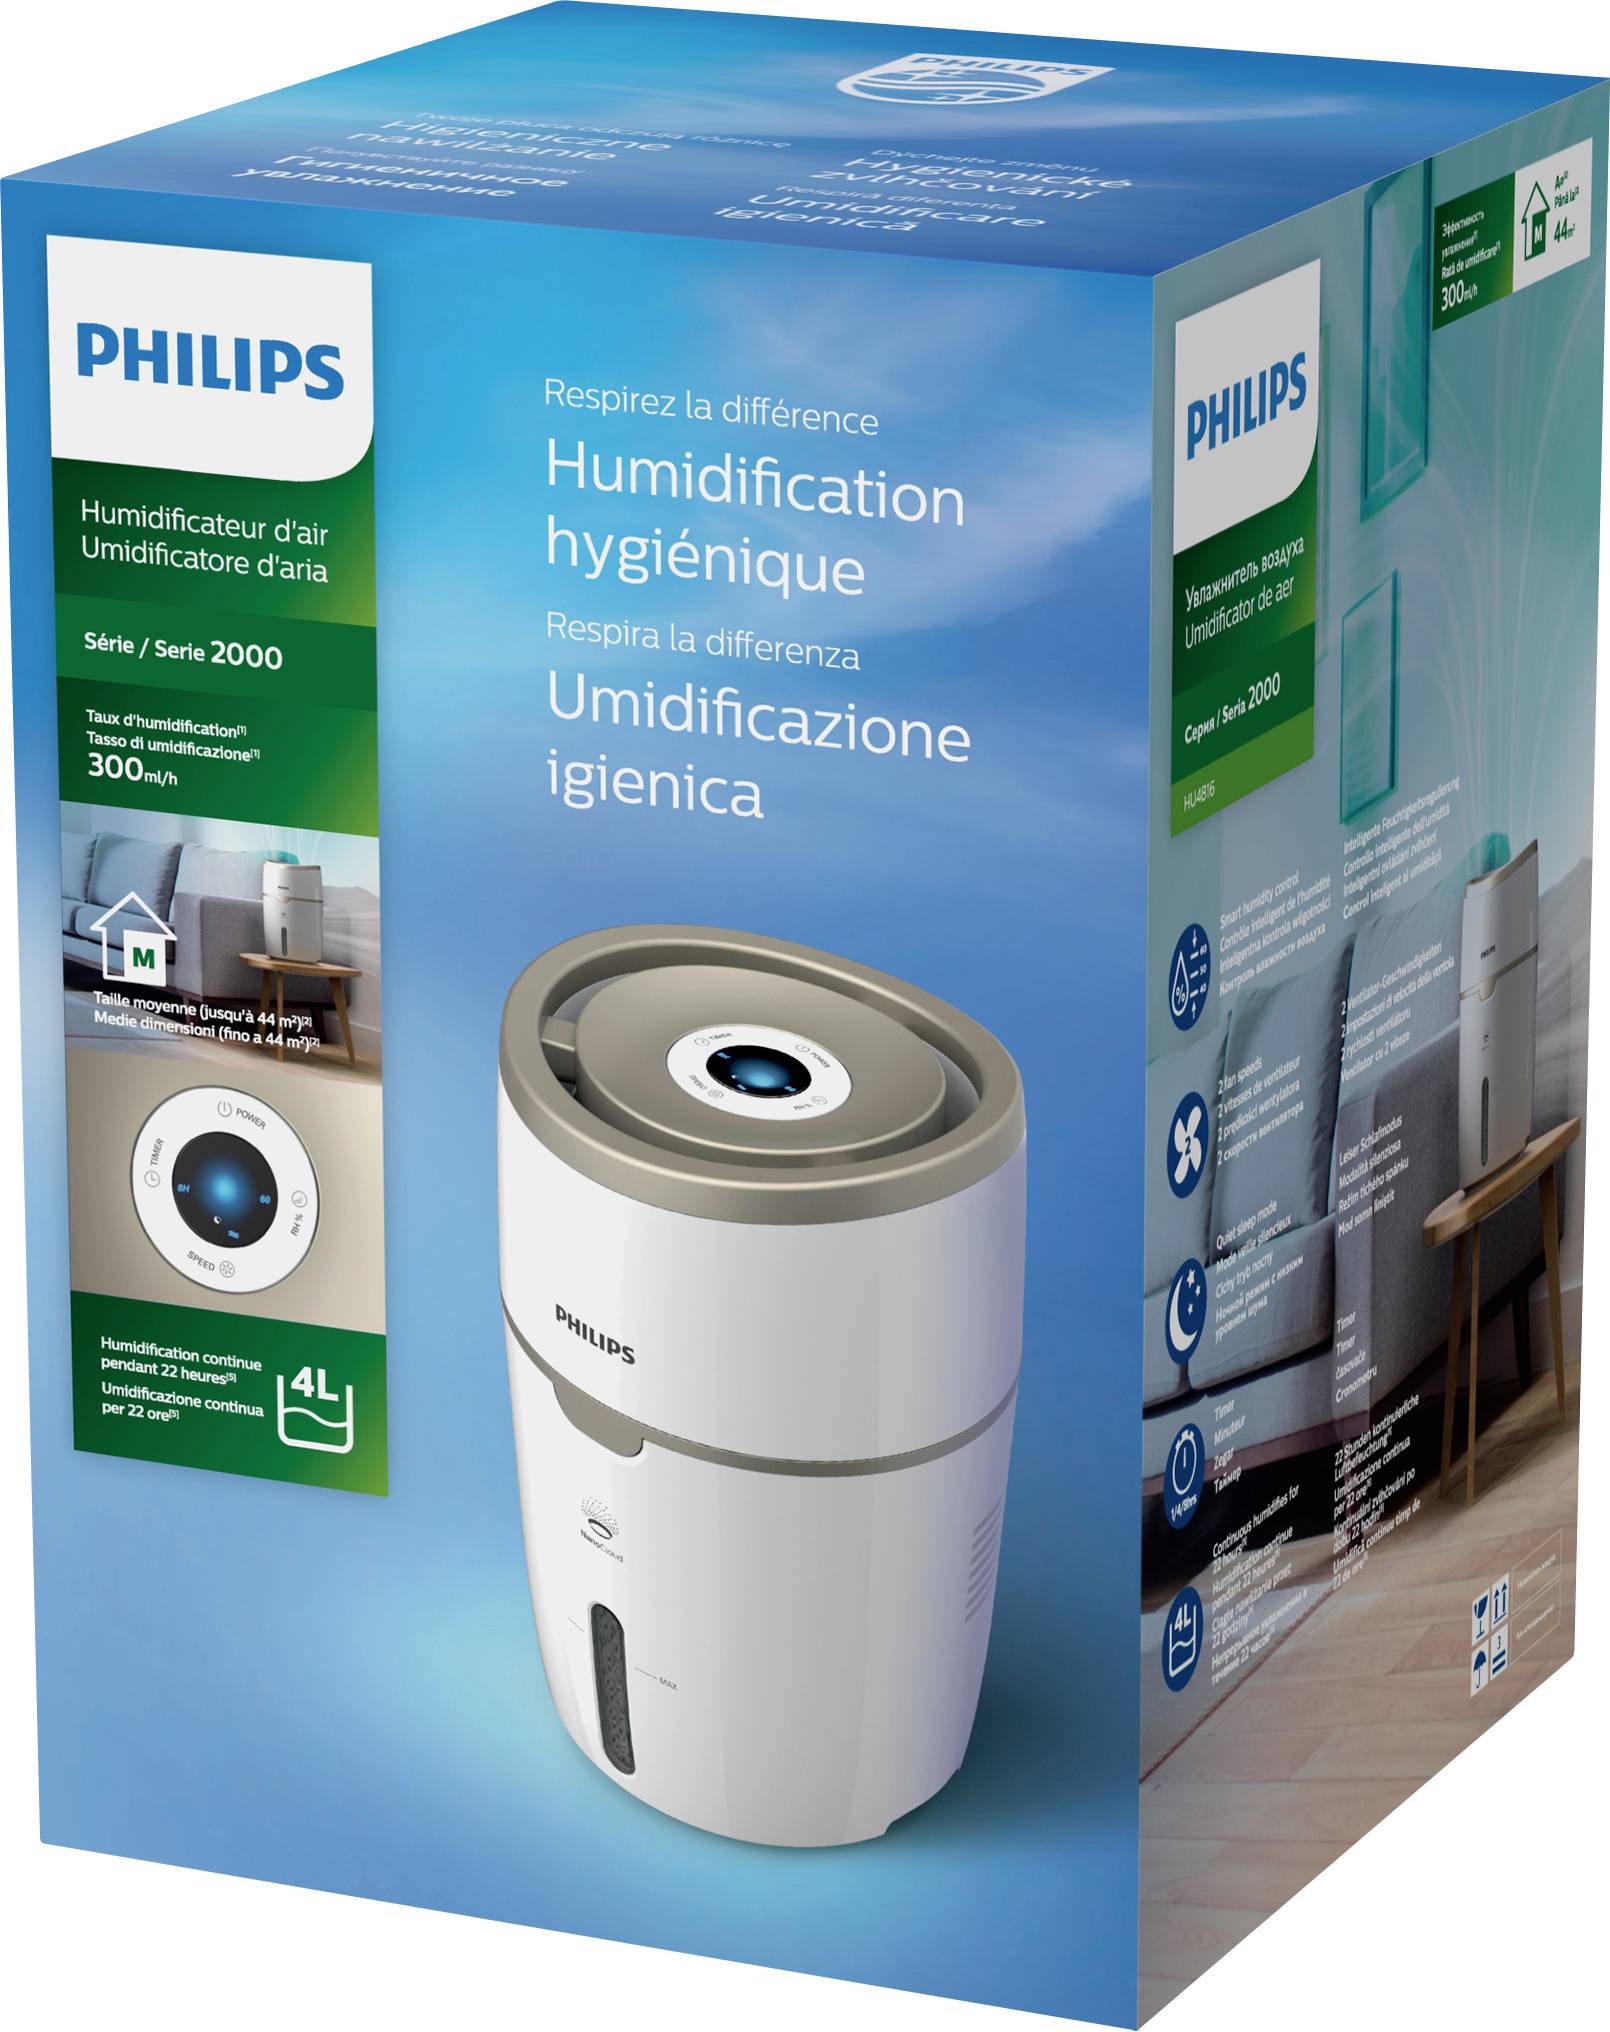 Филипс 2000 series. Philips hu4816. Philips увлажнитель 2000. Увлажнитель воздуха Philips NANOCLOUD. Hu3918/10 увлажнитель.